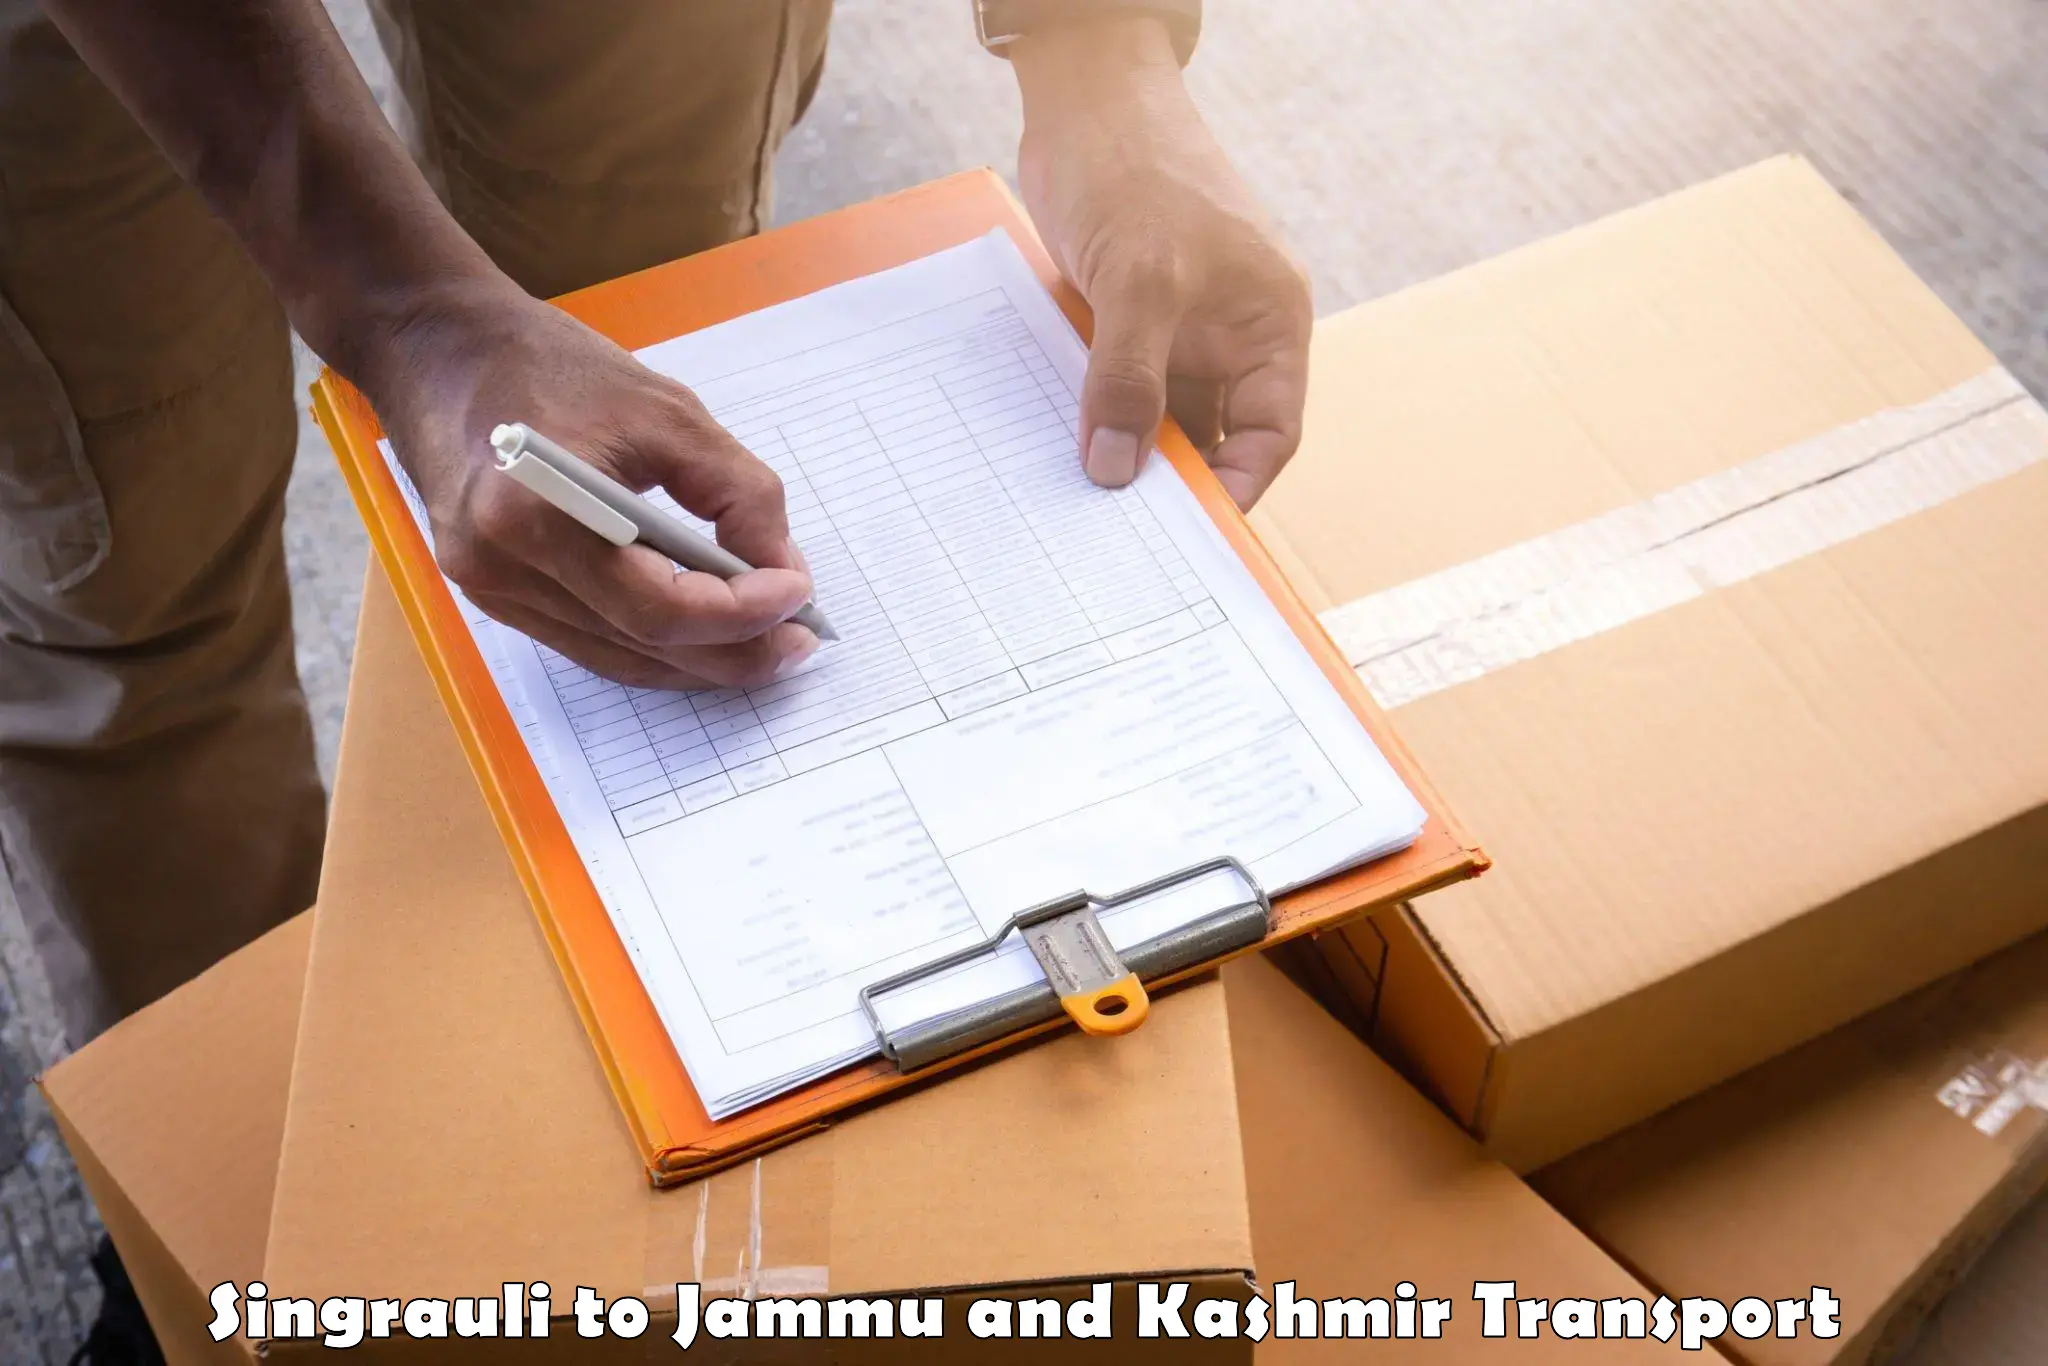 Delivery service Singrauli to University of Jammu